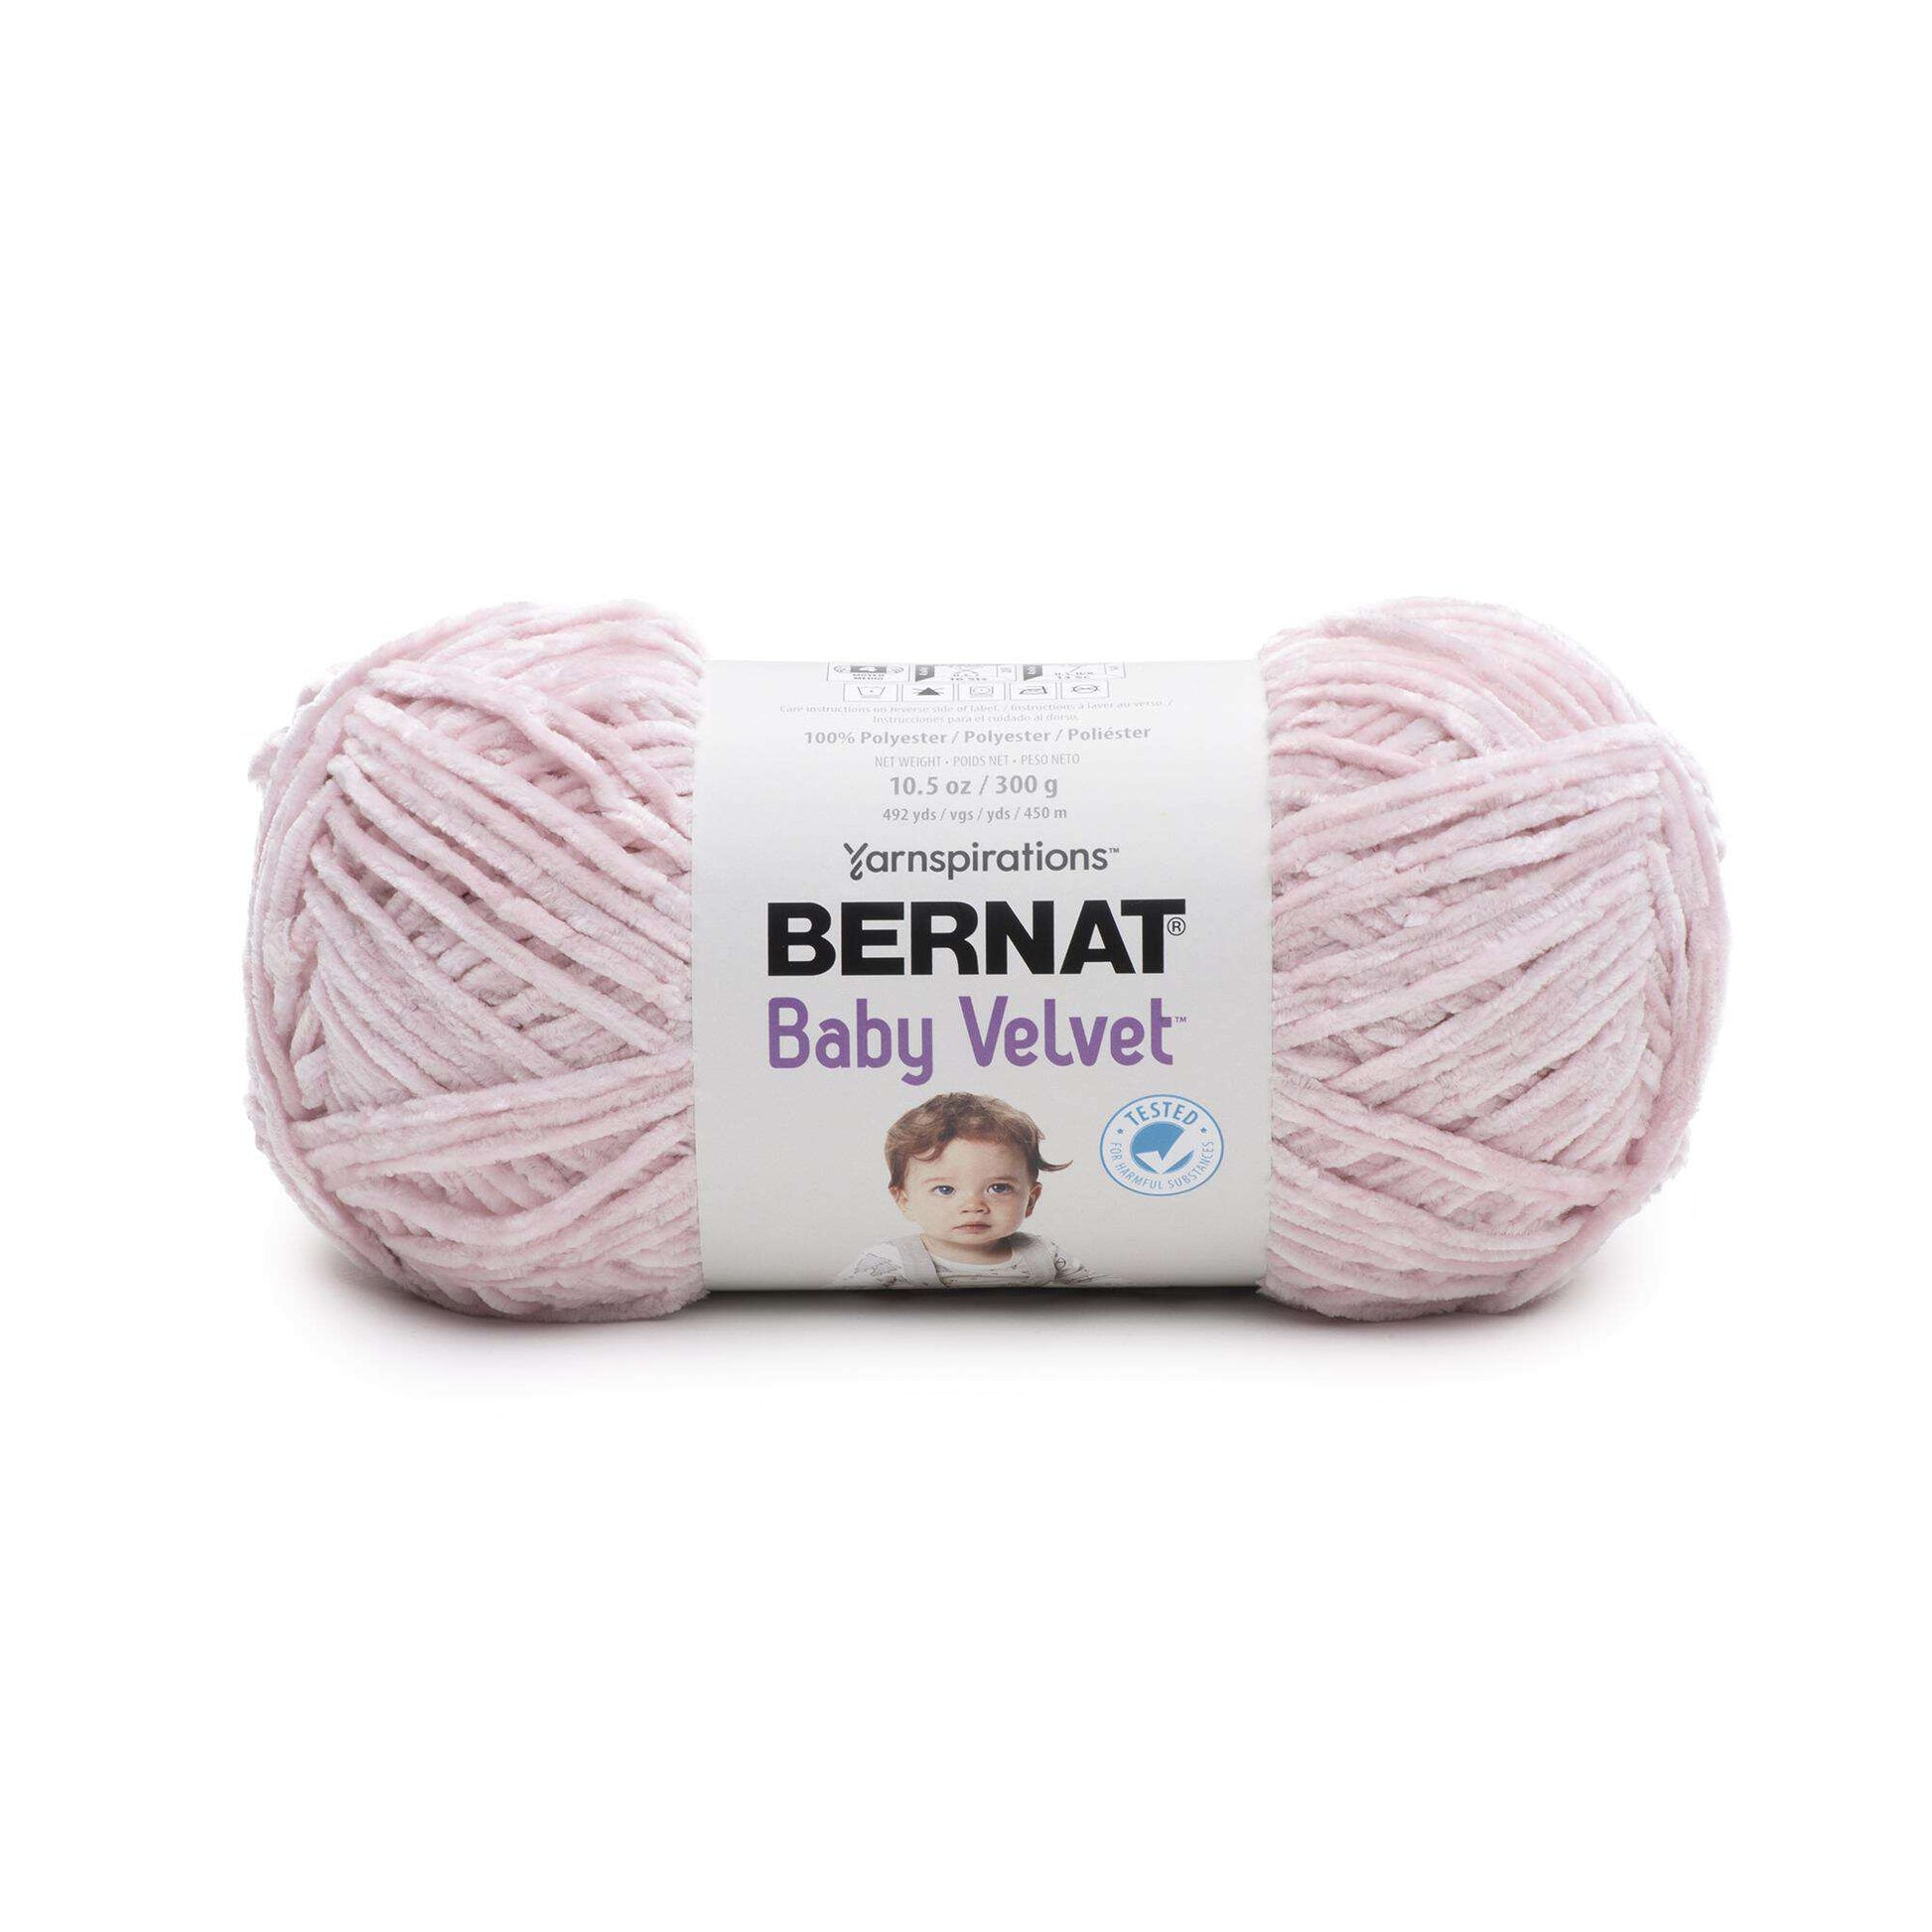 Bernat Baby Velvet Yarn (300g/10.5oz) - Clearance Shades*